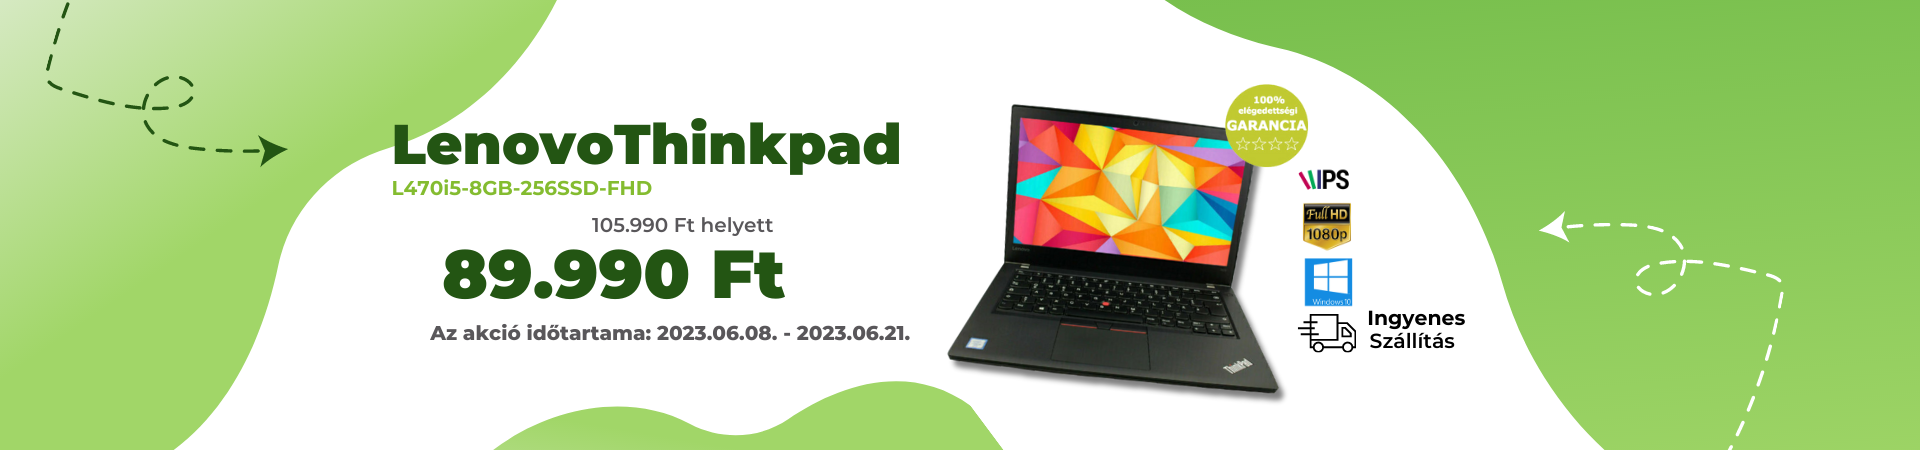 lenovo-thinkpad-L470-hasznalt-laptop-magyar-billentyuzet-akcio-banner-2023-06-08-21